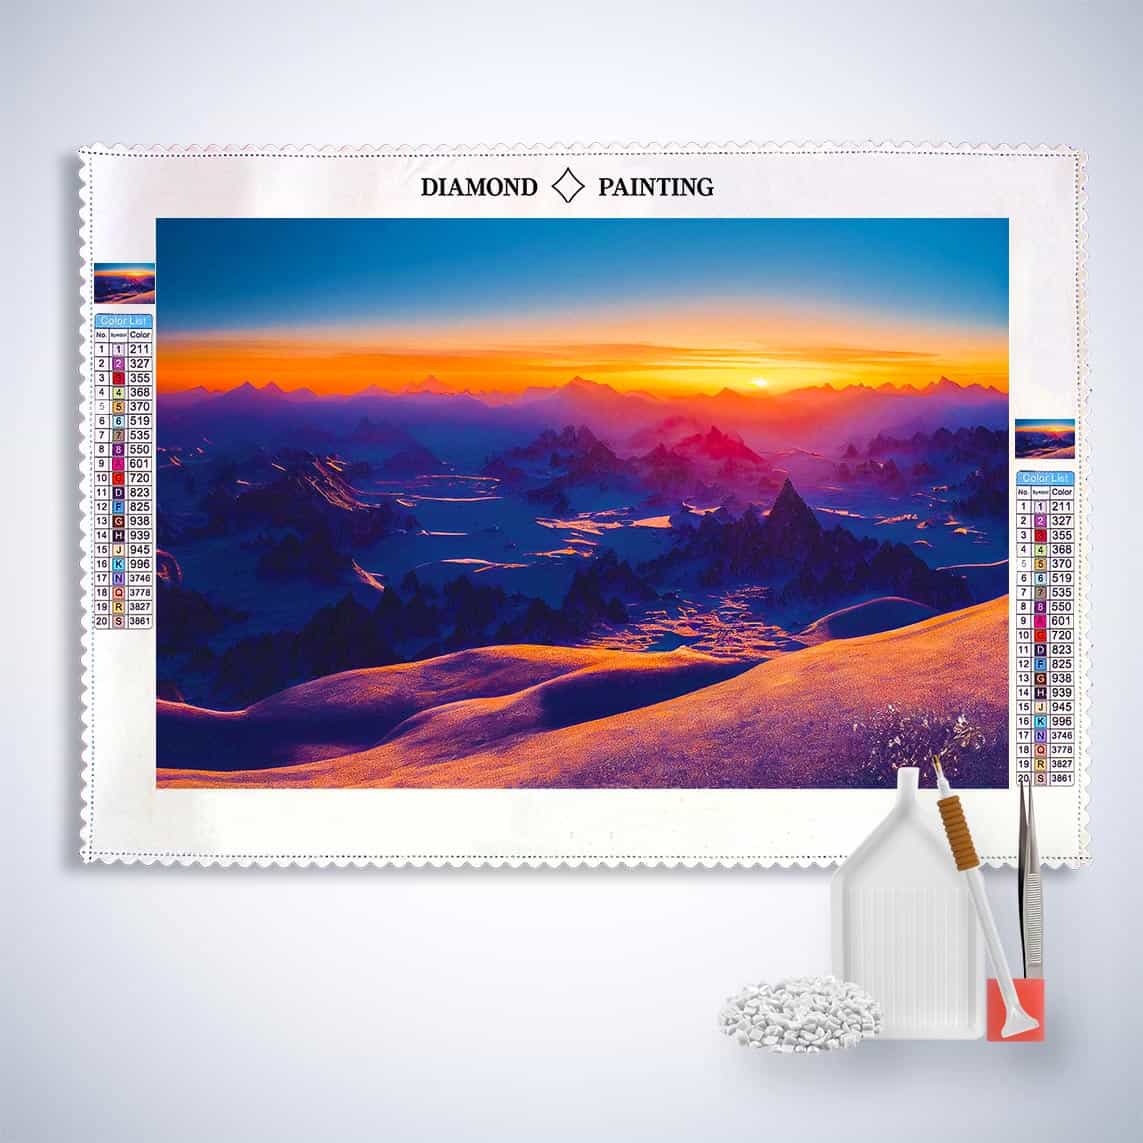 Diamond Painting - Winterwunderland, Sonnenaufgang - gedruckt in Ultra-HD - Horizontal, Landschaft, Winter